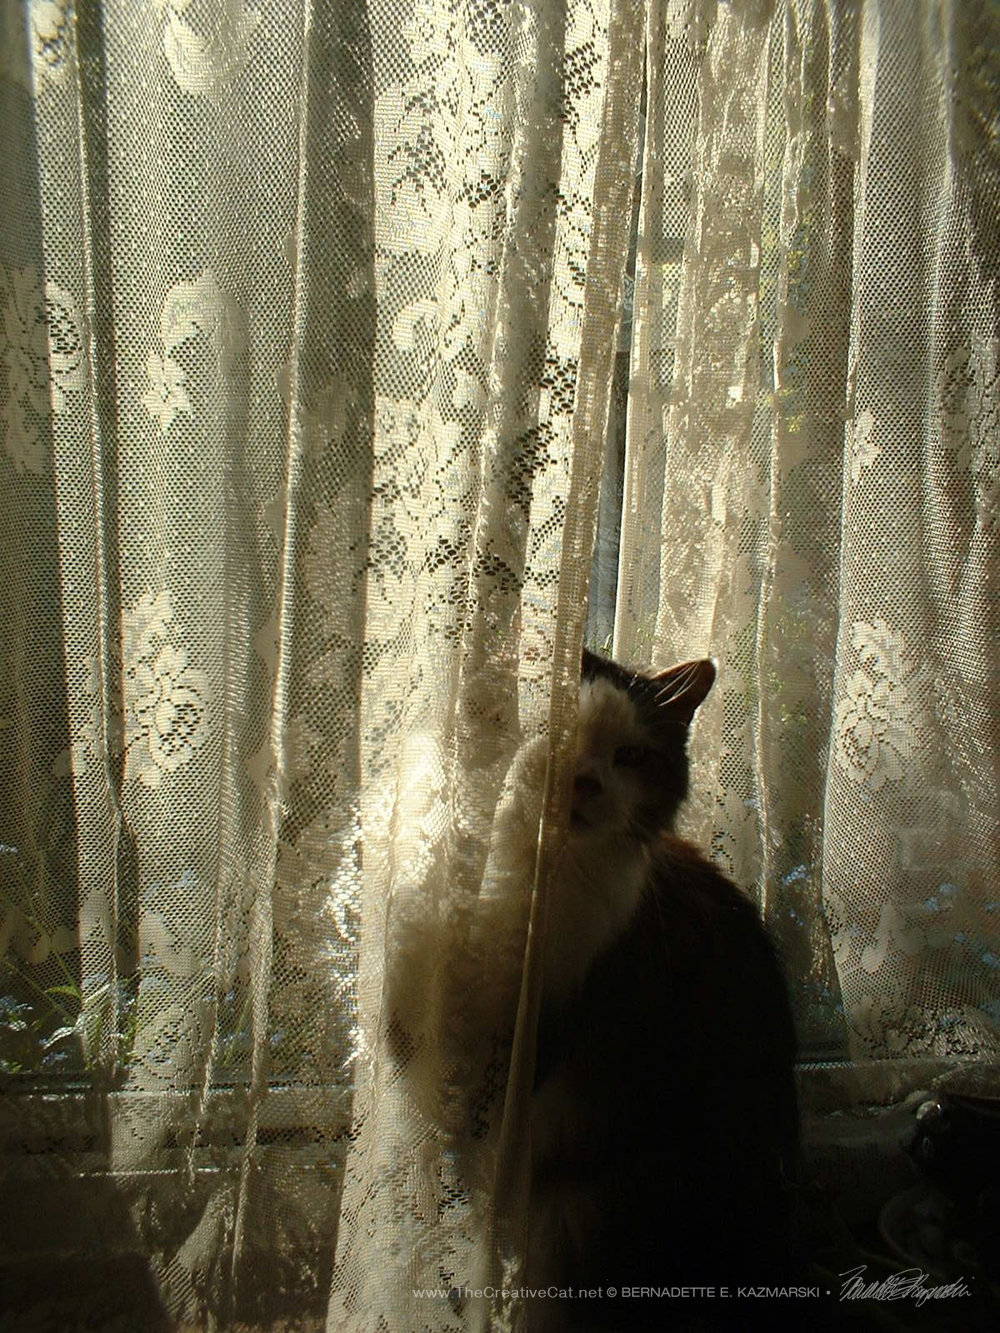 Sophie peeking around the curtain #1